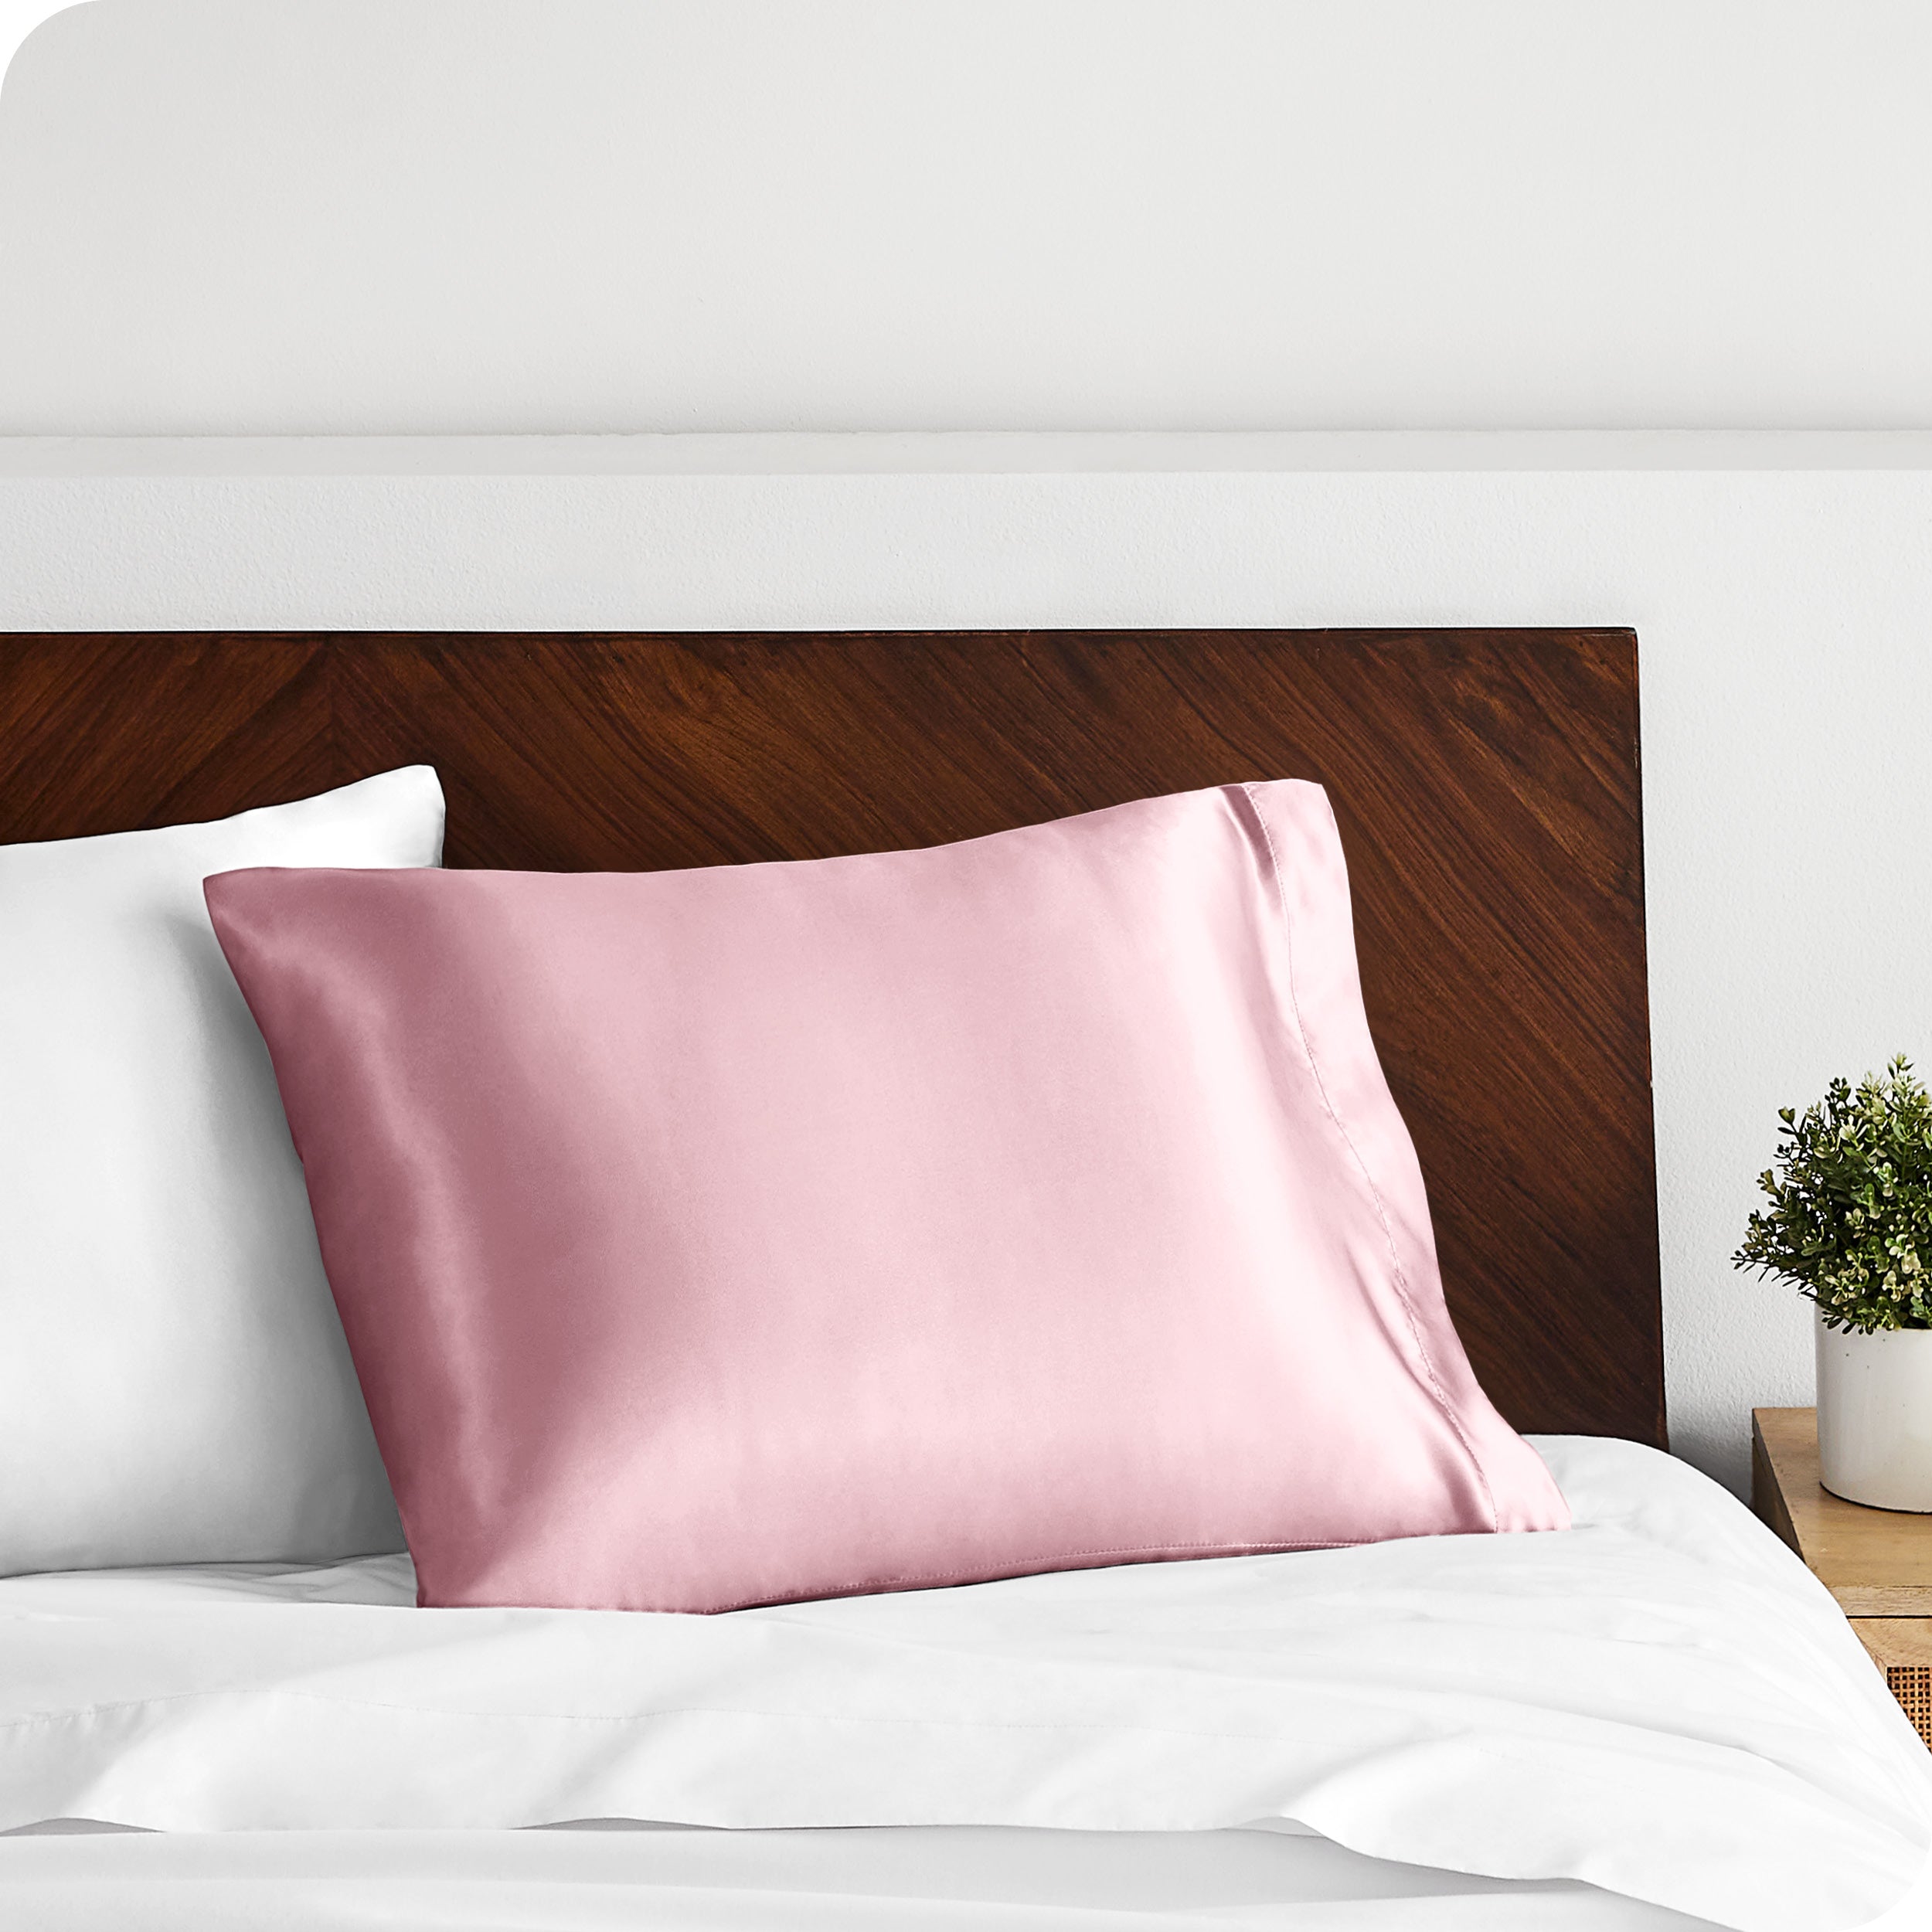 A pink silk pillowcase on a pillow resting on a headboard